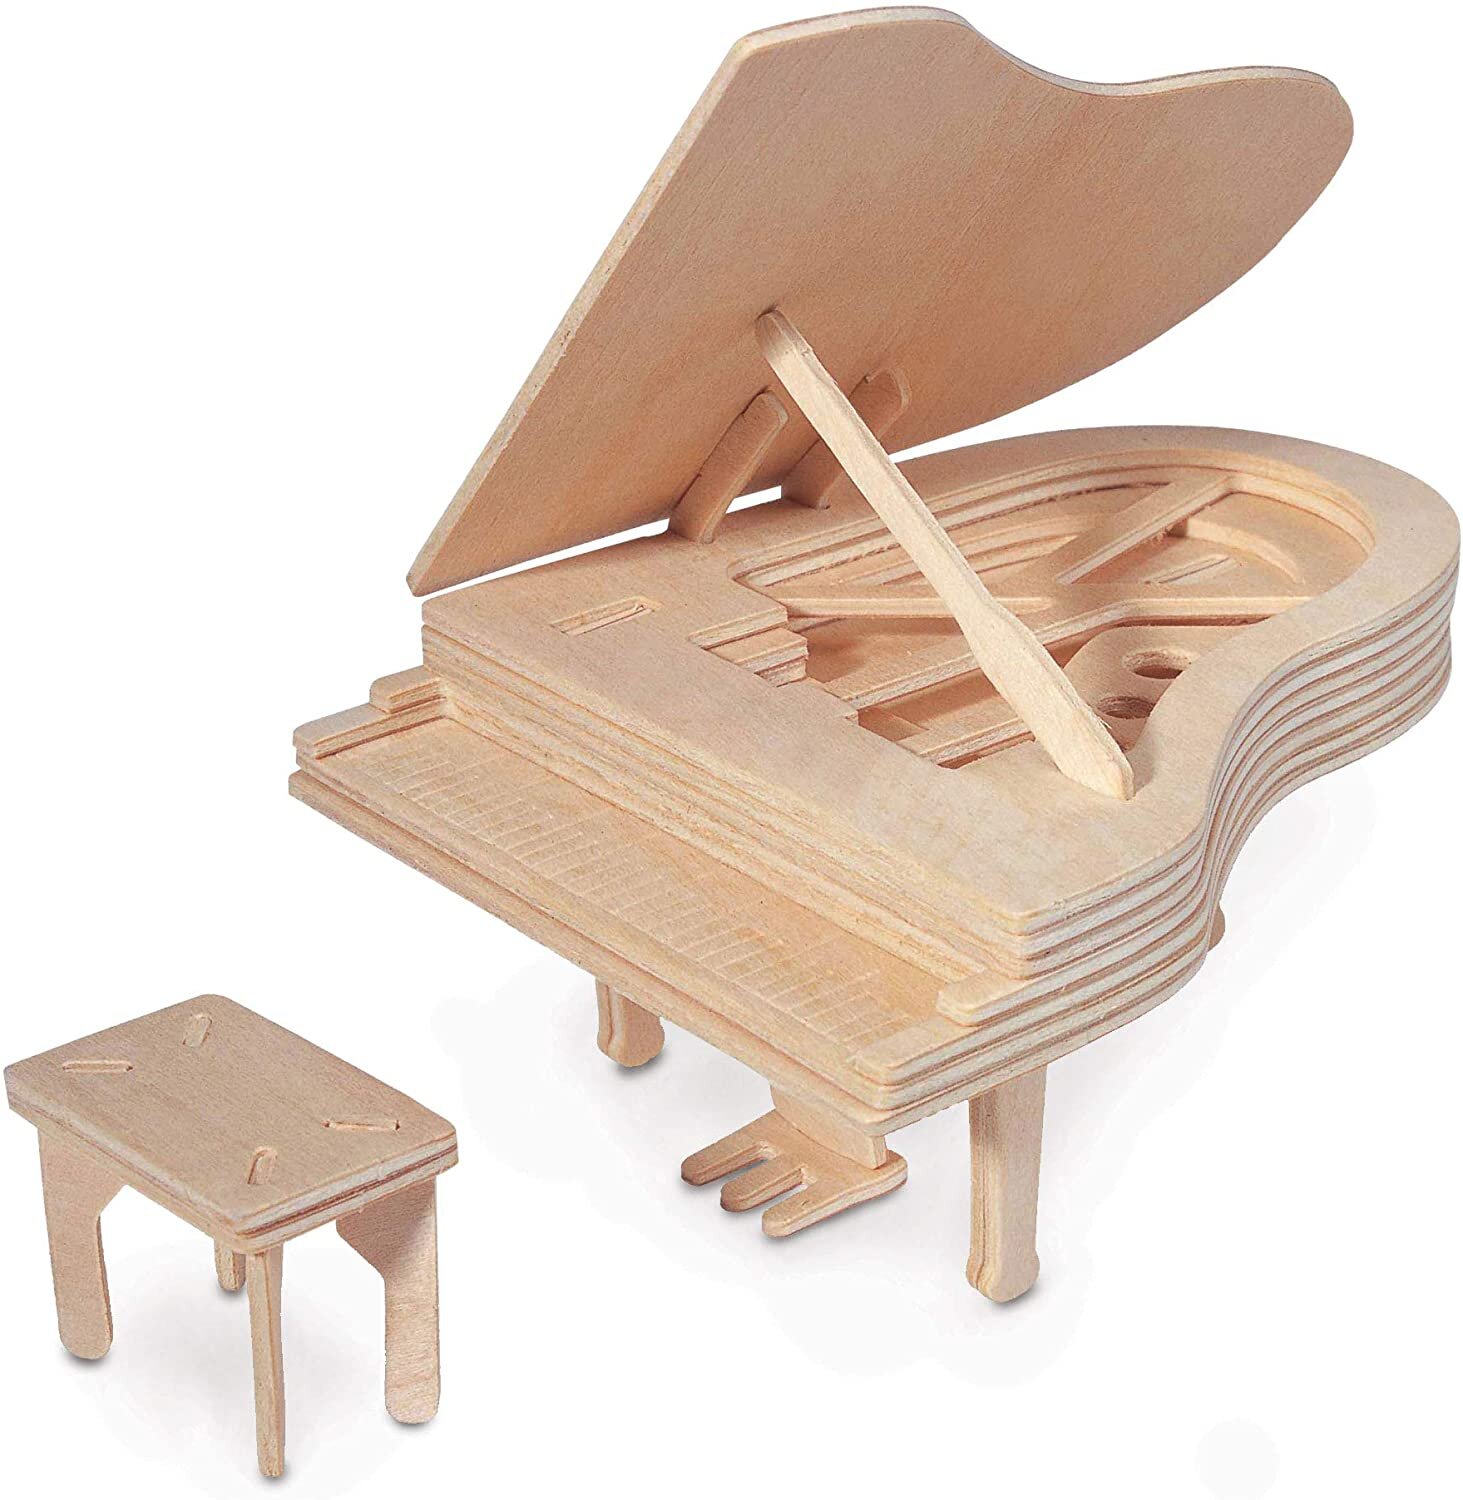 Hal Leonard Quay Woodcraft Piano Kit : photo 1